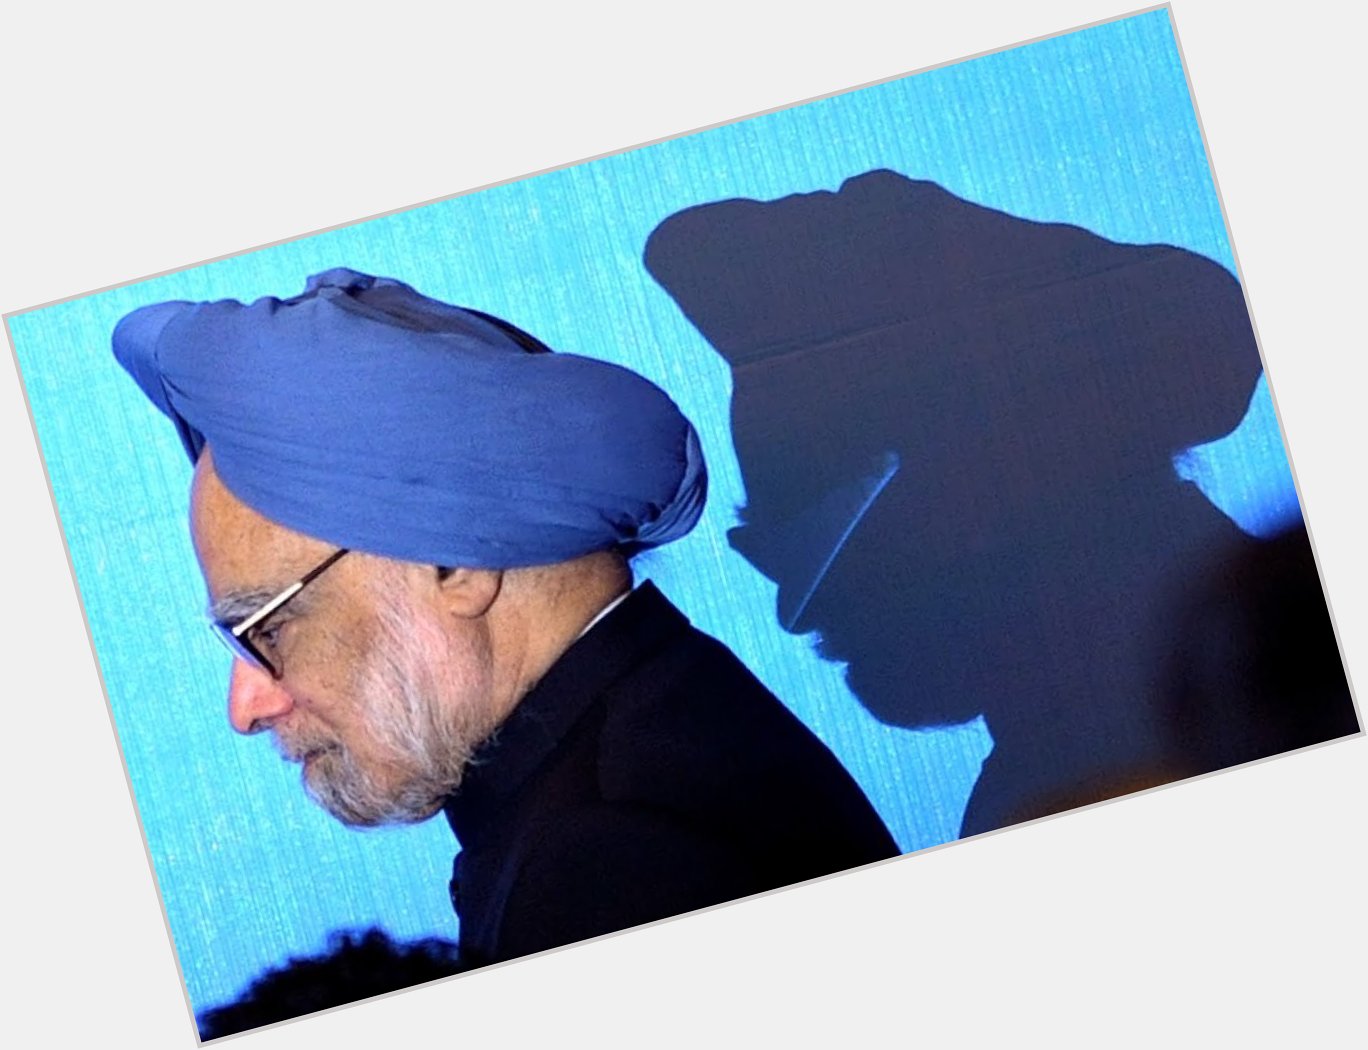 Wishing a very happy birthday to former Prime Minister Dr. Manmohan Singh ji. 